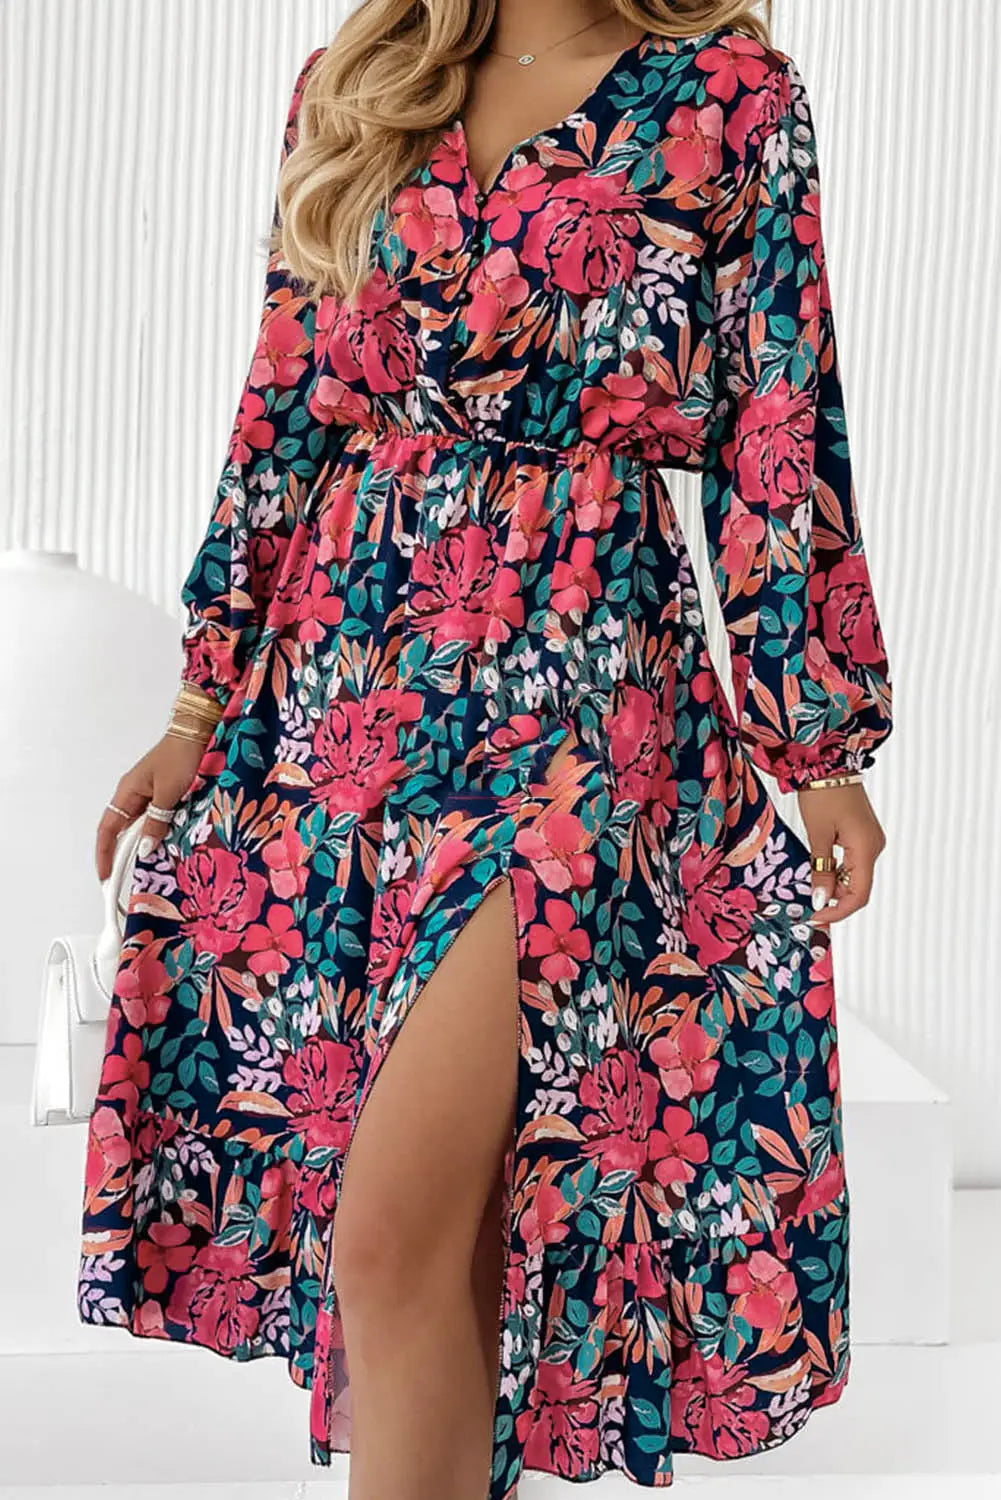 Red v neck elastic high waist split floral dress - s / 100% polyester - dresses